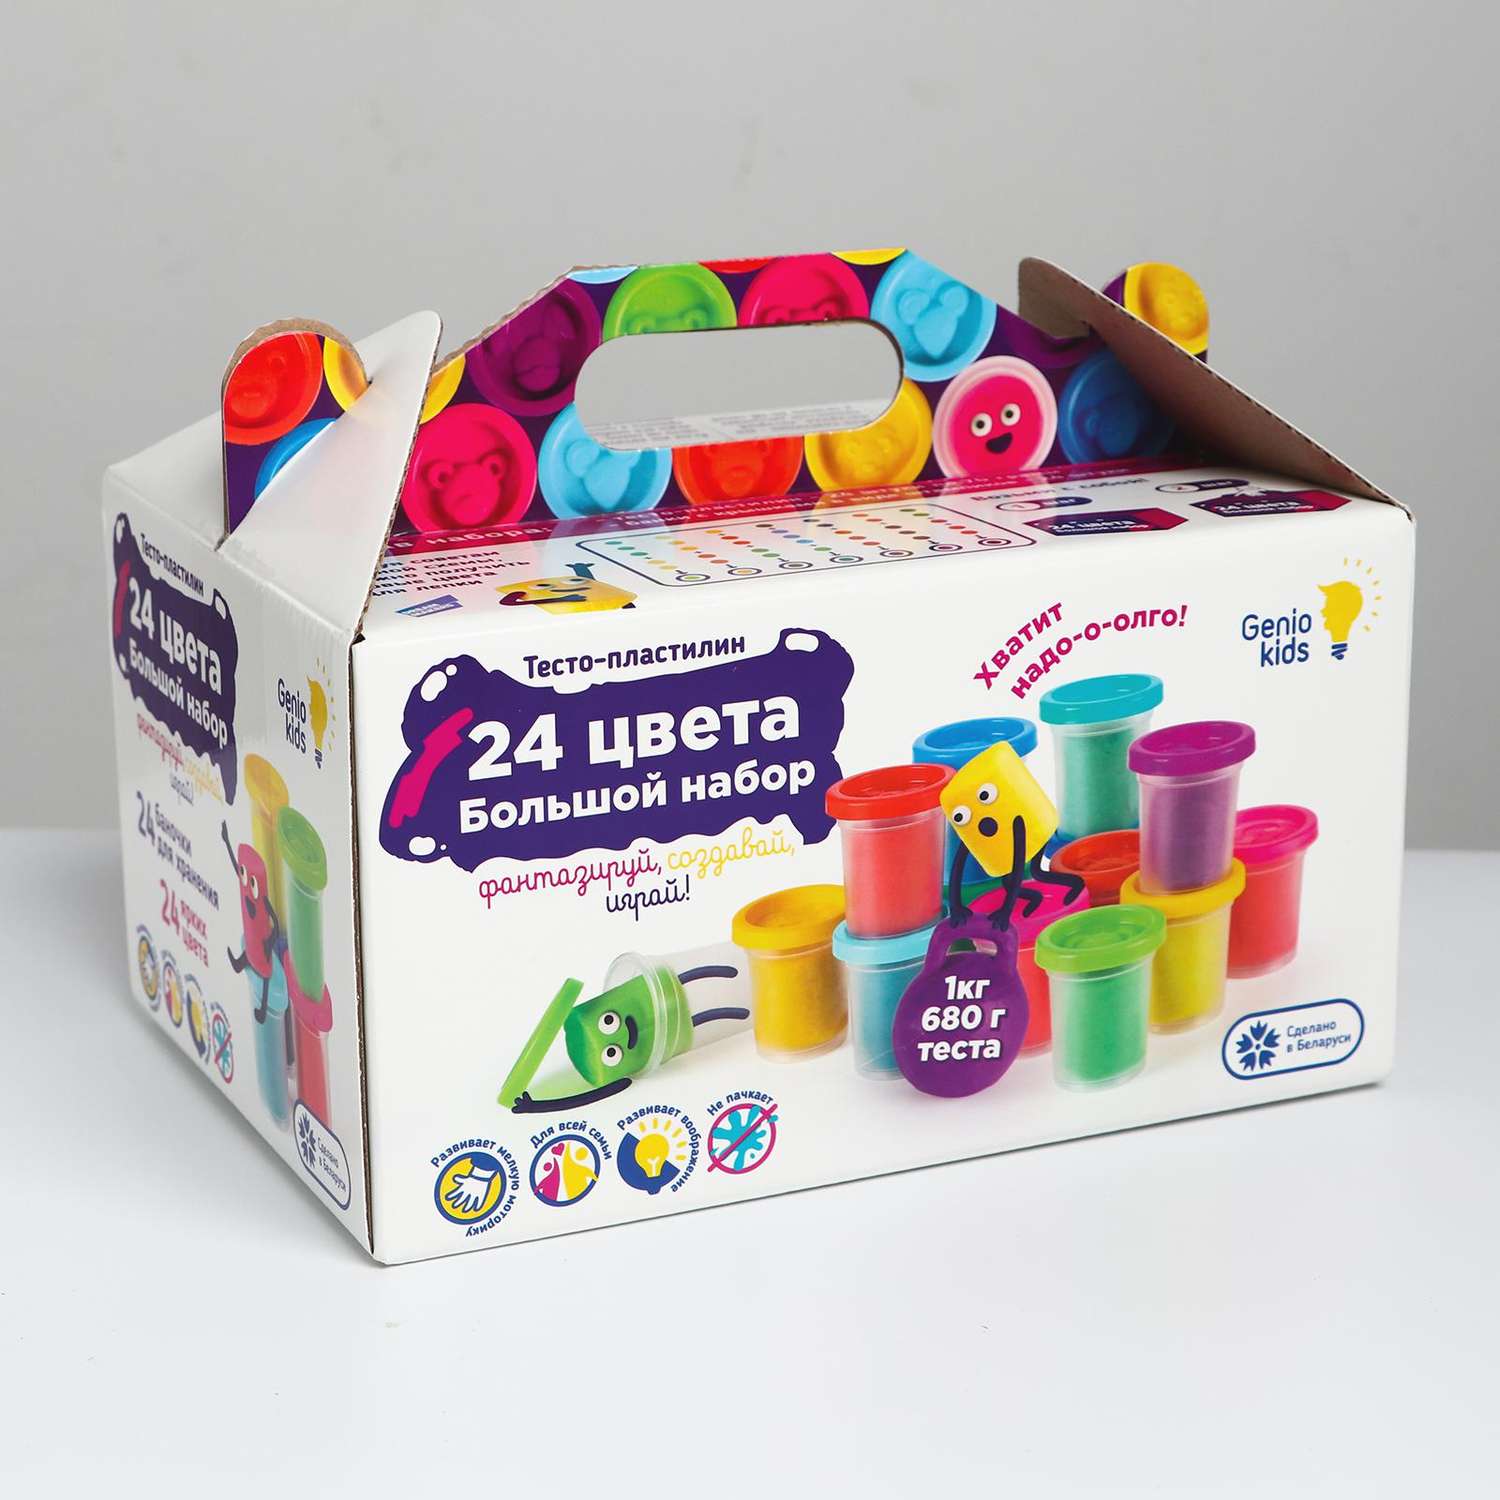 Набор Genio Kids для детской лепки «Тесто-пластилин 24 баночки» - фото 1